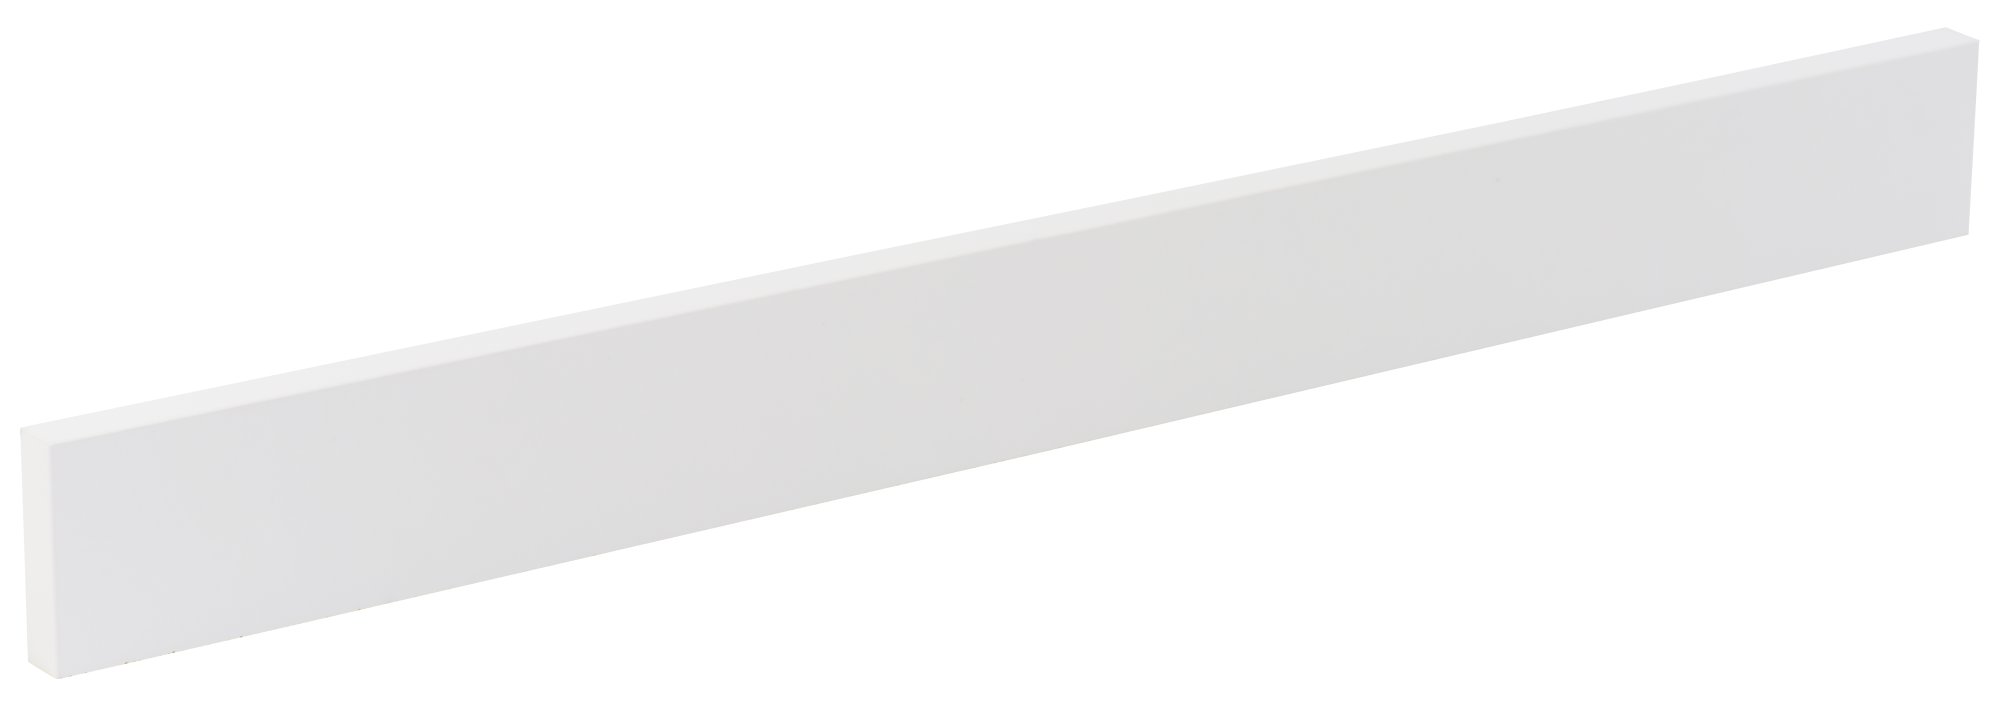 Regleta angular de cocina milos blanco mate h 76.8 - 90 x 90 cm